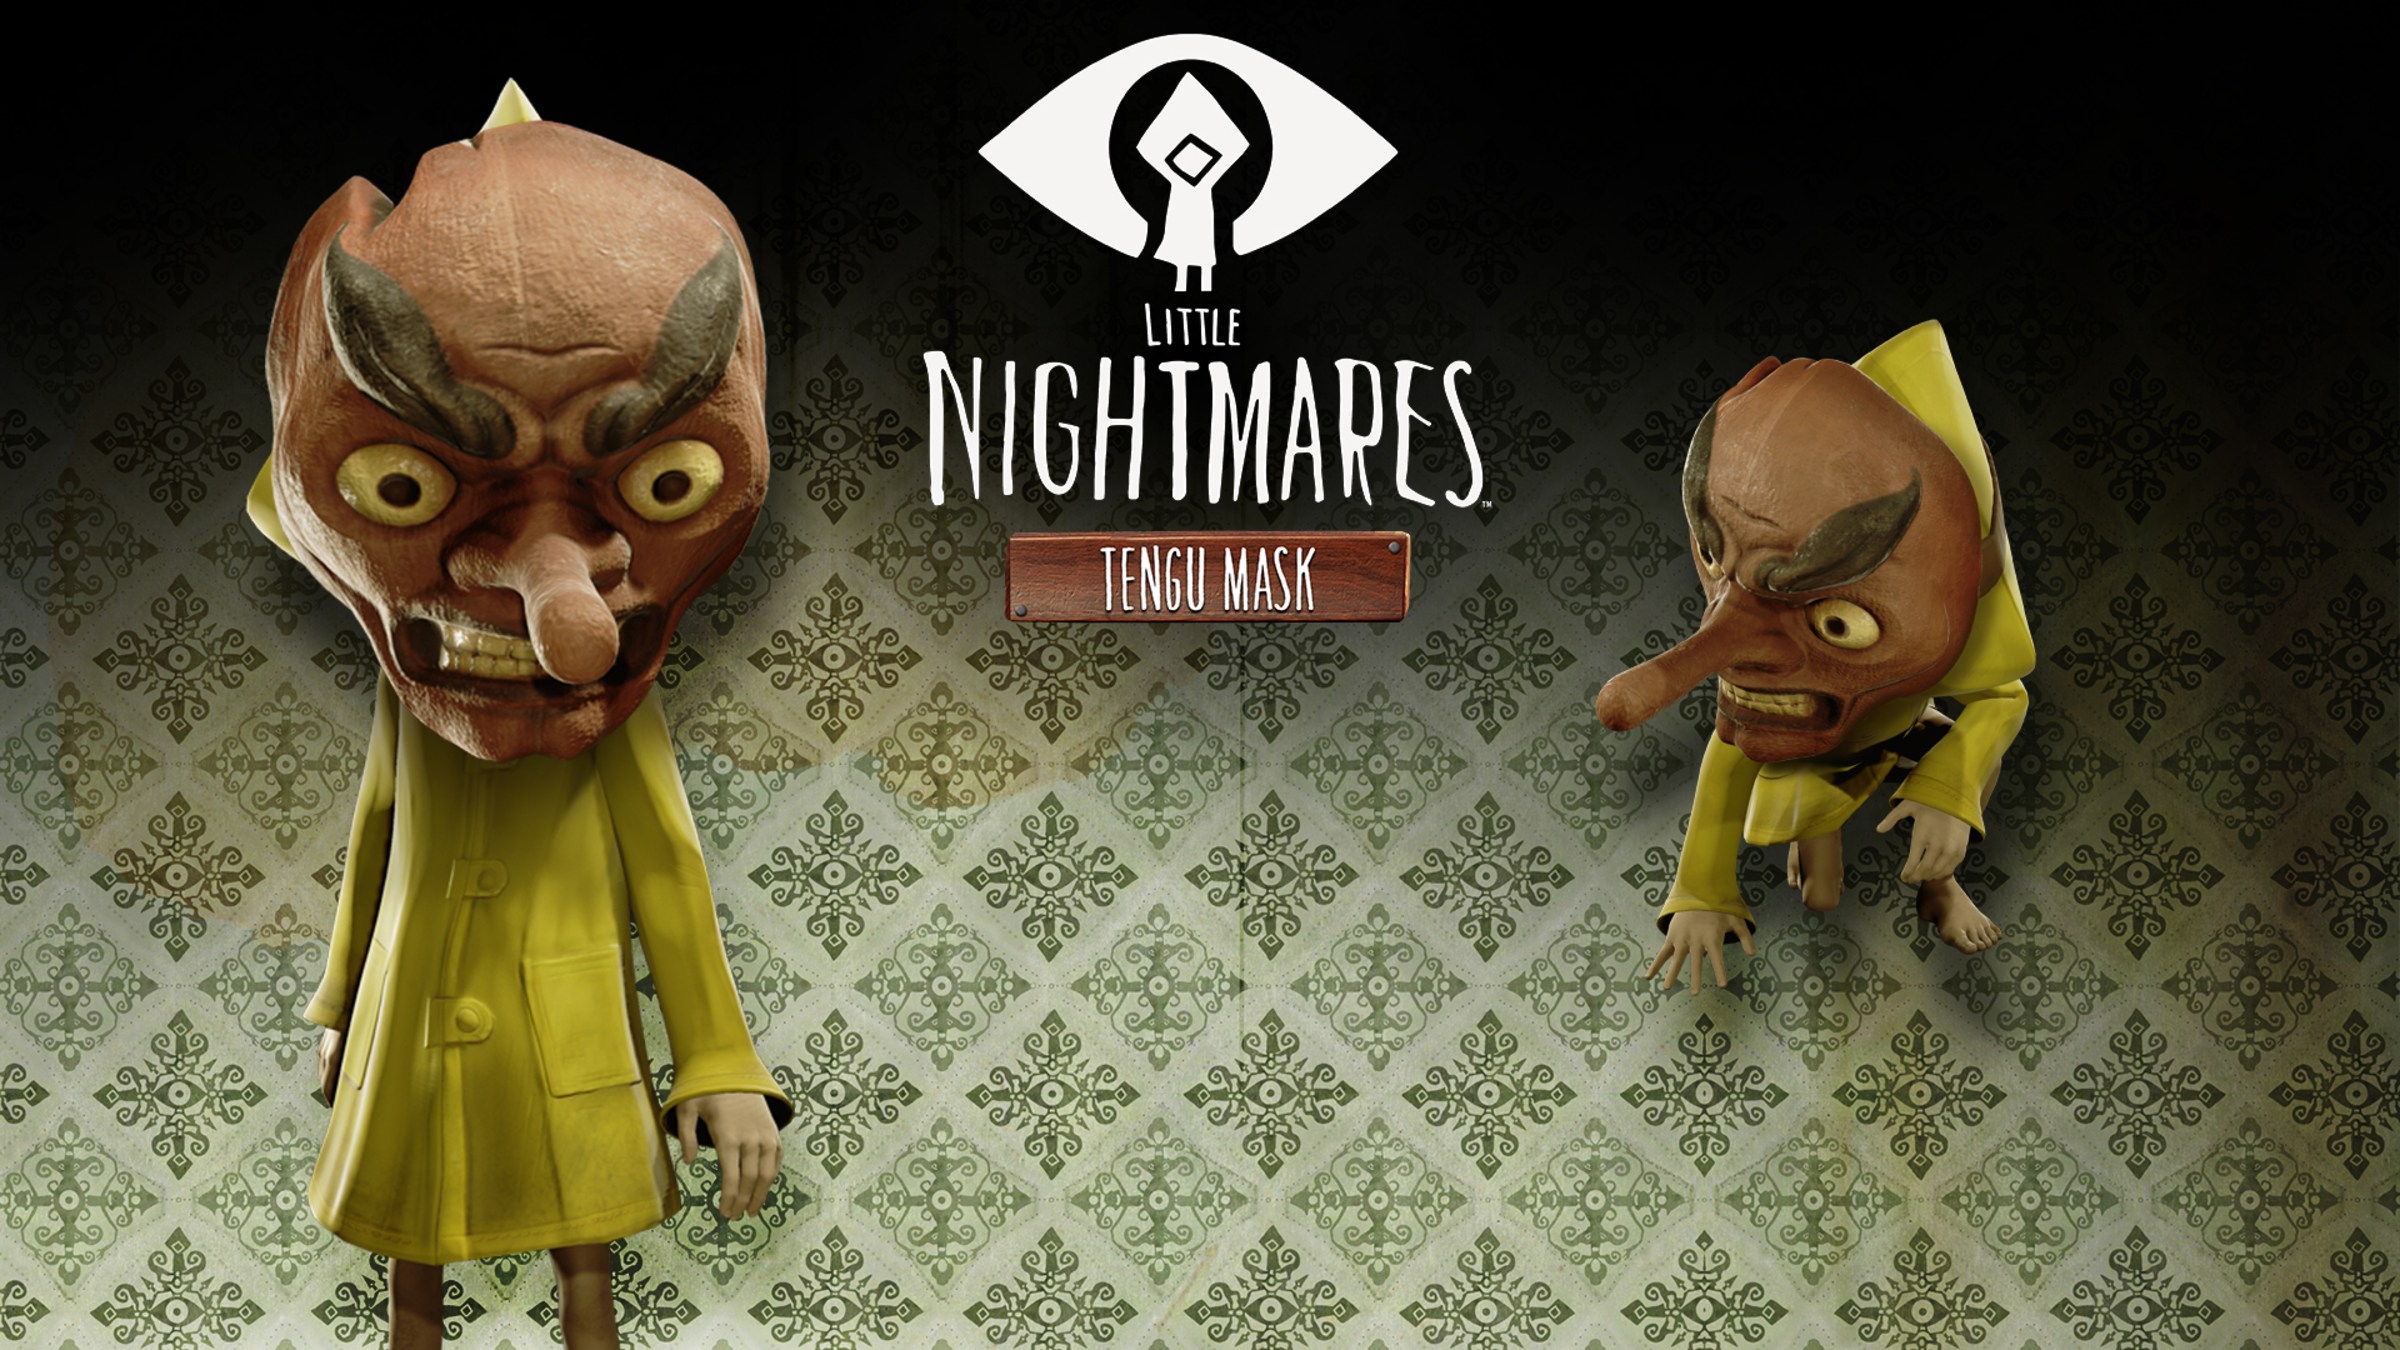 Little Nightmares - Tengu Mask for Nintendo Switch - Nintendo Official Site